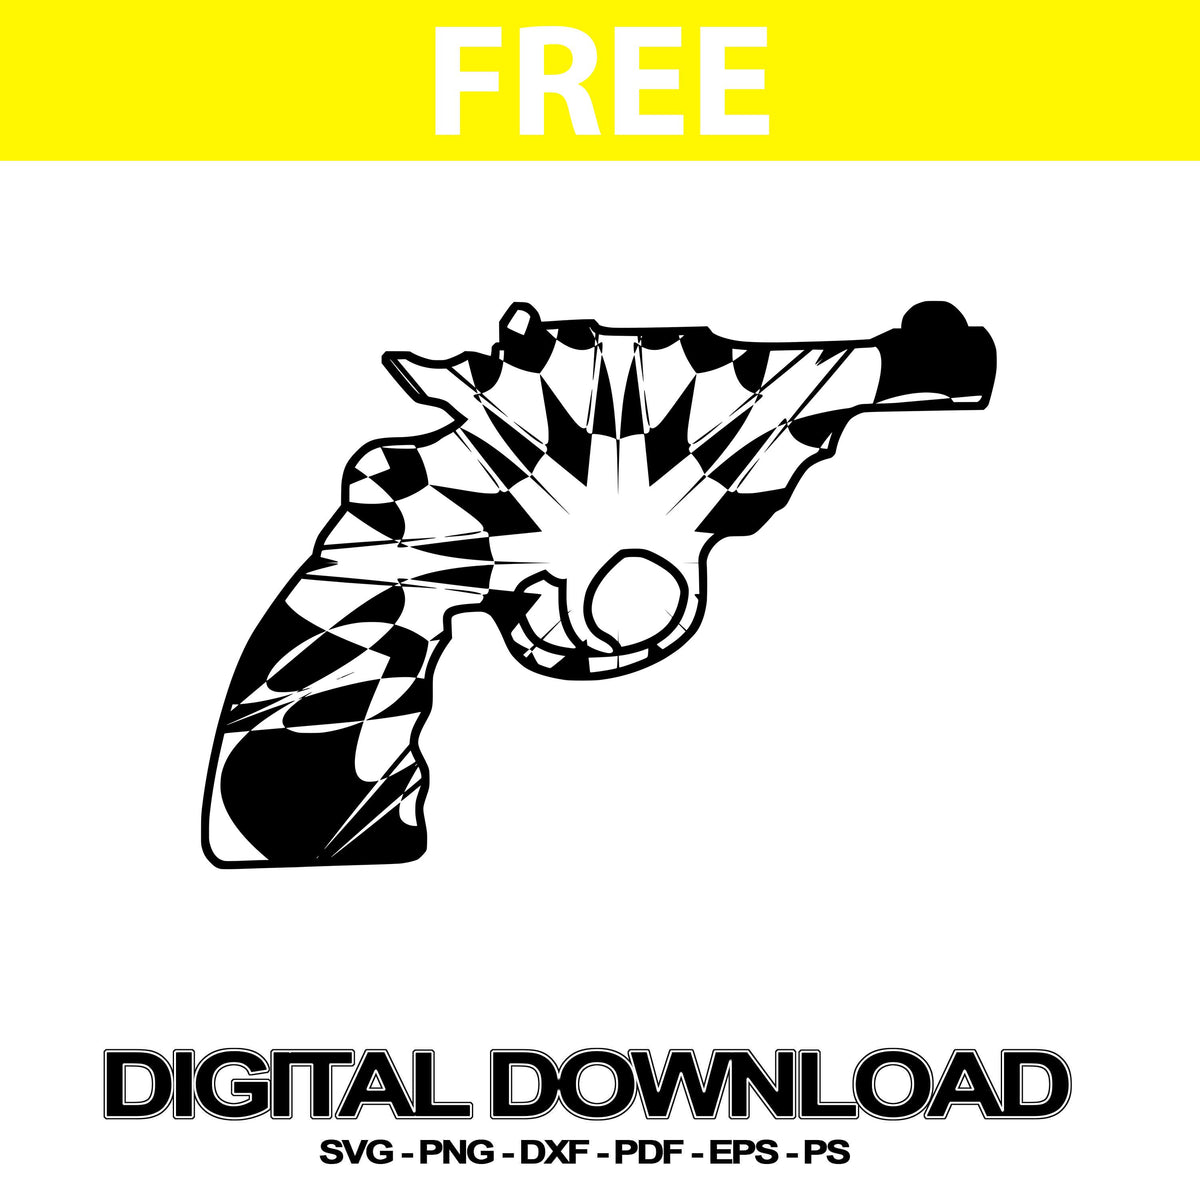 Download Revolver Gun Svgs Files Mandala Images | Svg Free ...